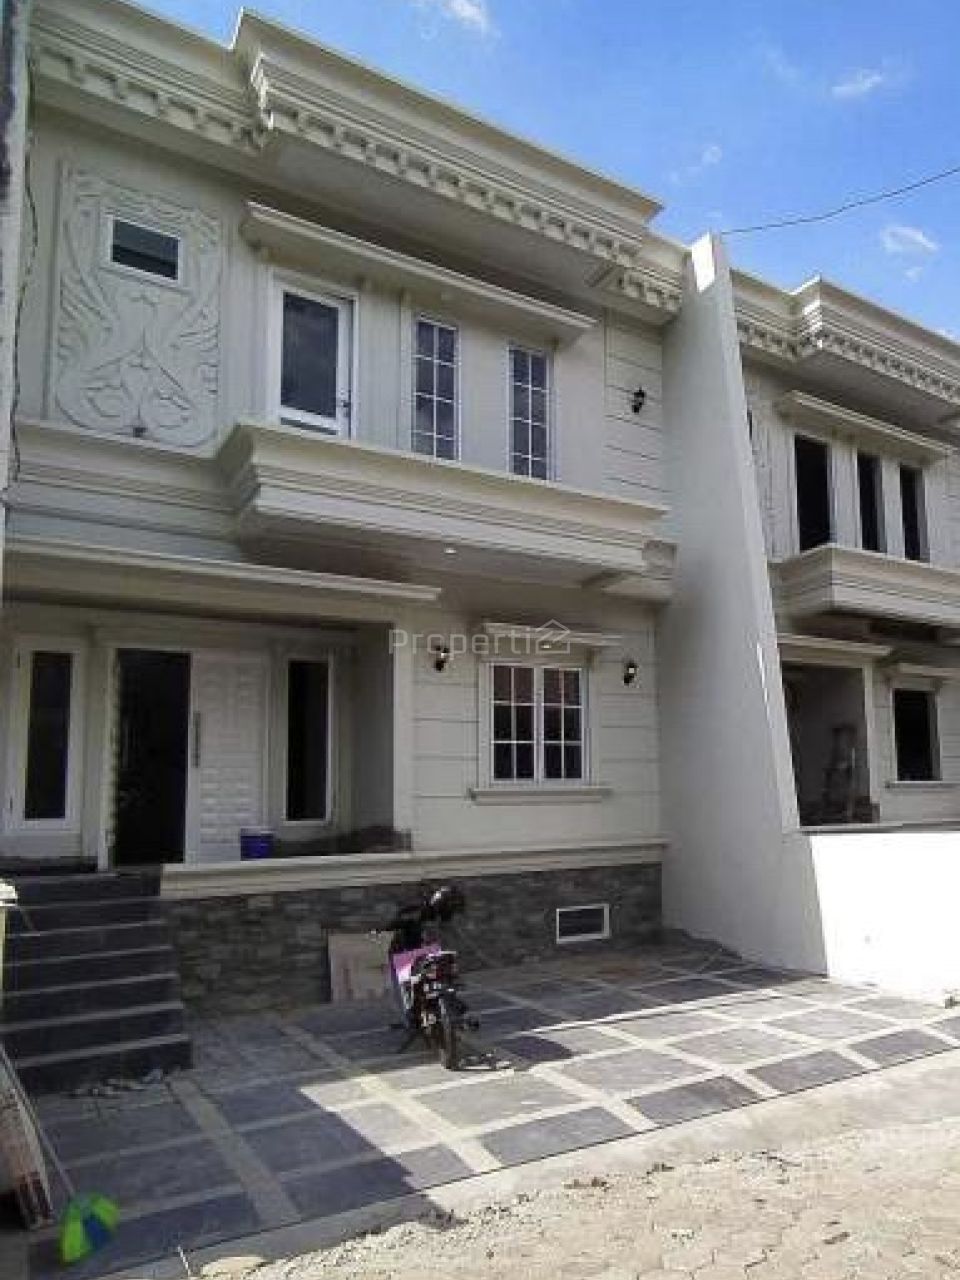 New House at Jl. Cilandak KKO, South Jakarta, DKI Jakarta